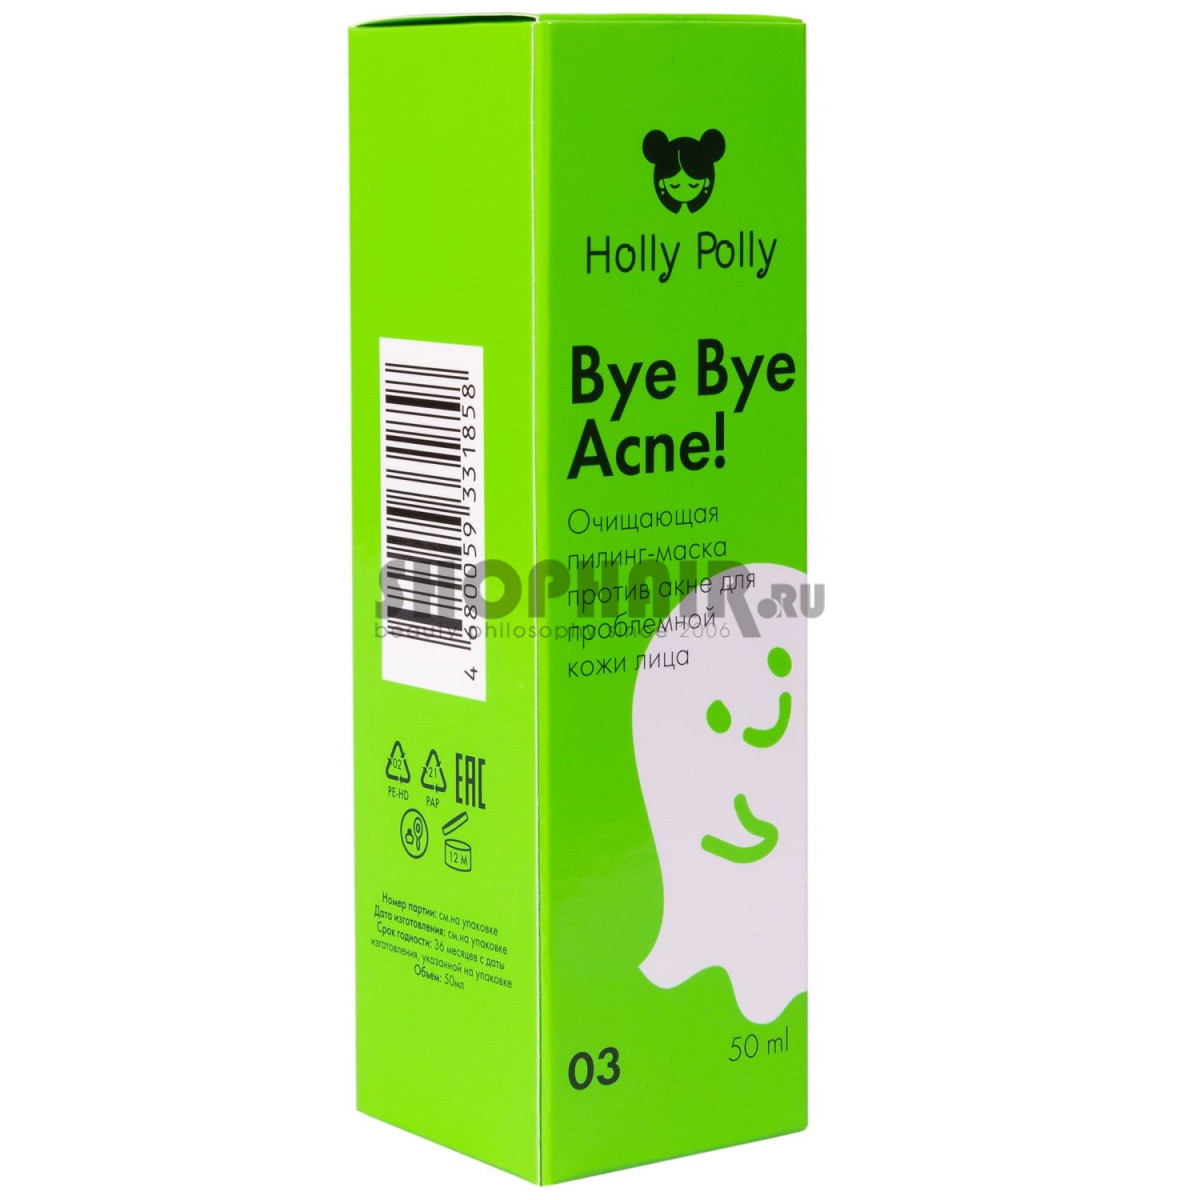 Holly Polly Bye Bye Acne! - Очищающая пилинг-маска против акне и воспалений 50 мл Holly Polly (Россия) купить по цене 229 руб.